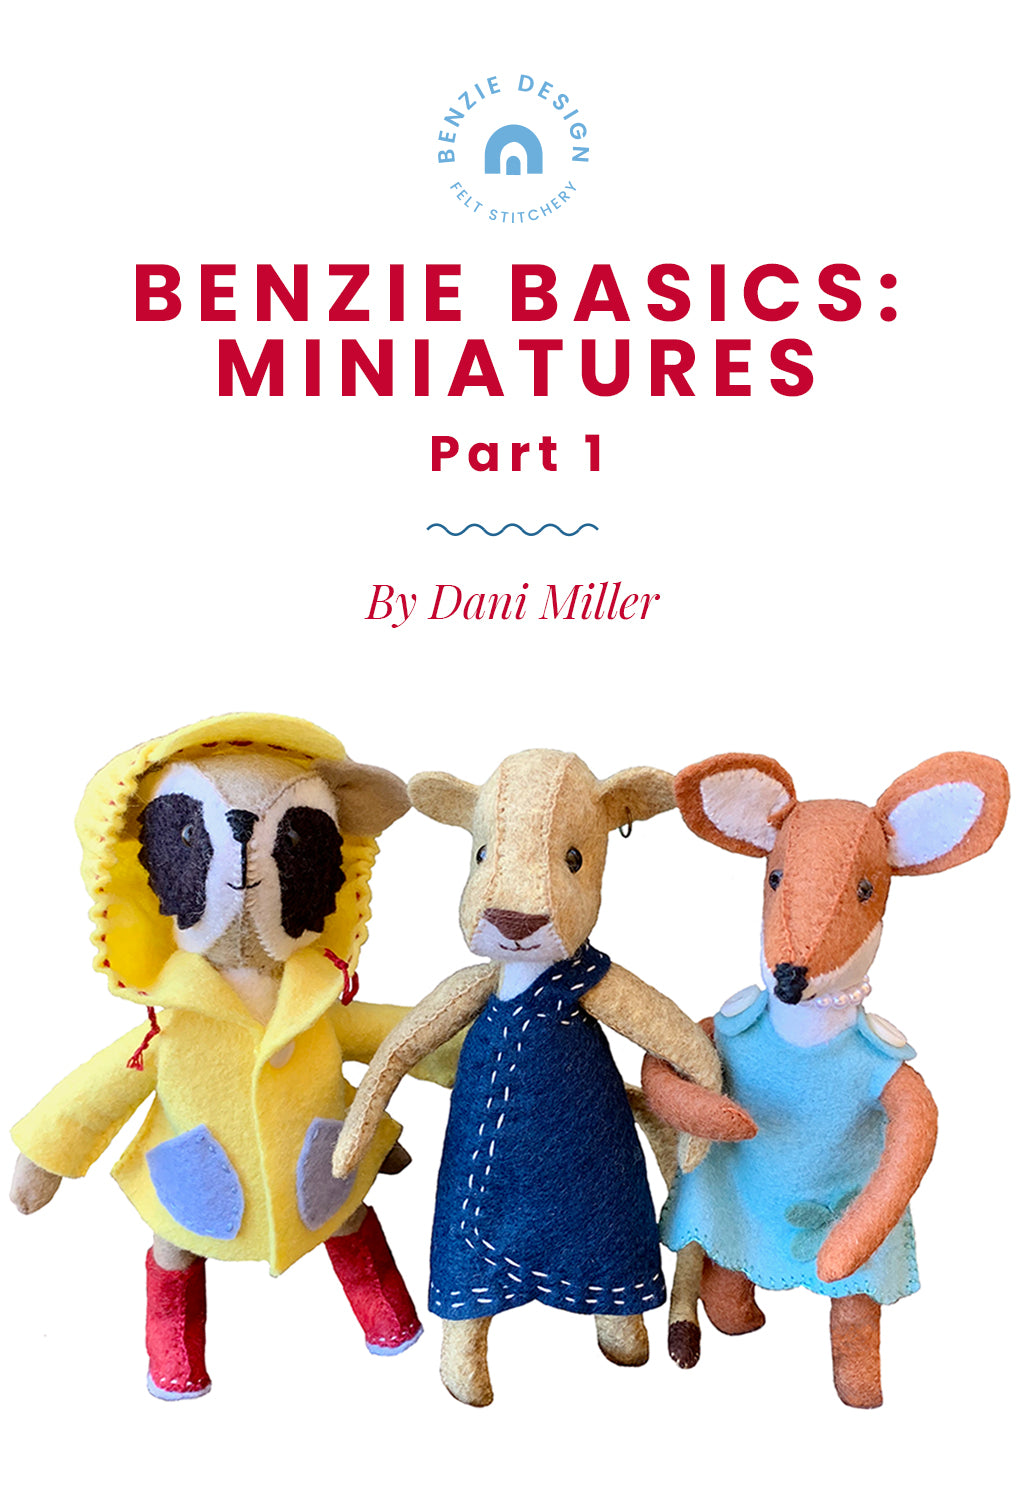 Benzie Basics: Miniatures Series Part One